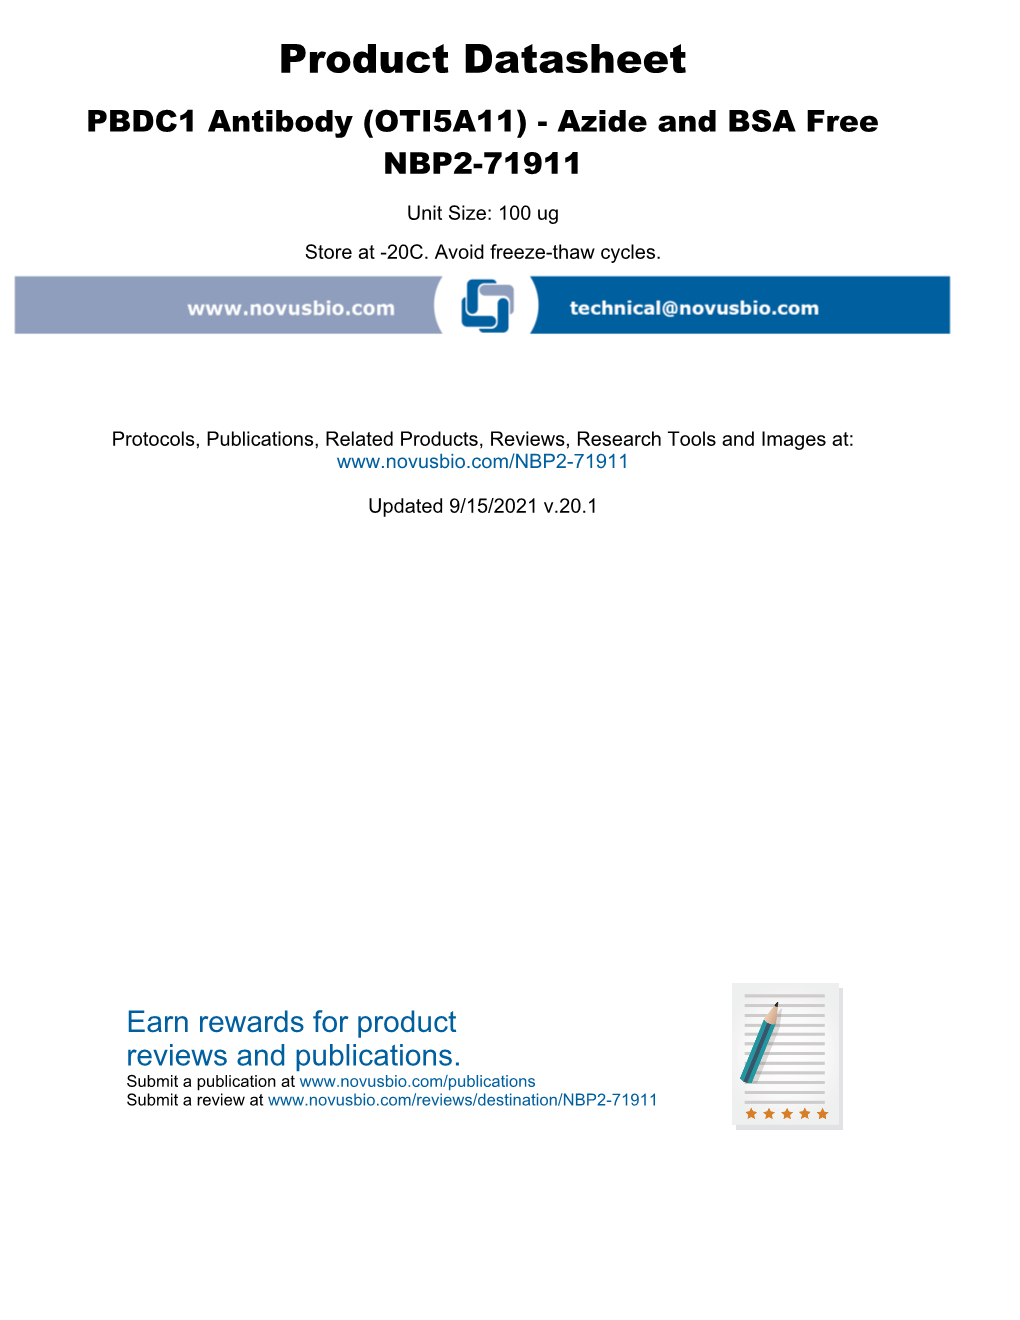 Product Datasheet PBDC1 Antibody (OTI5A11